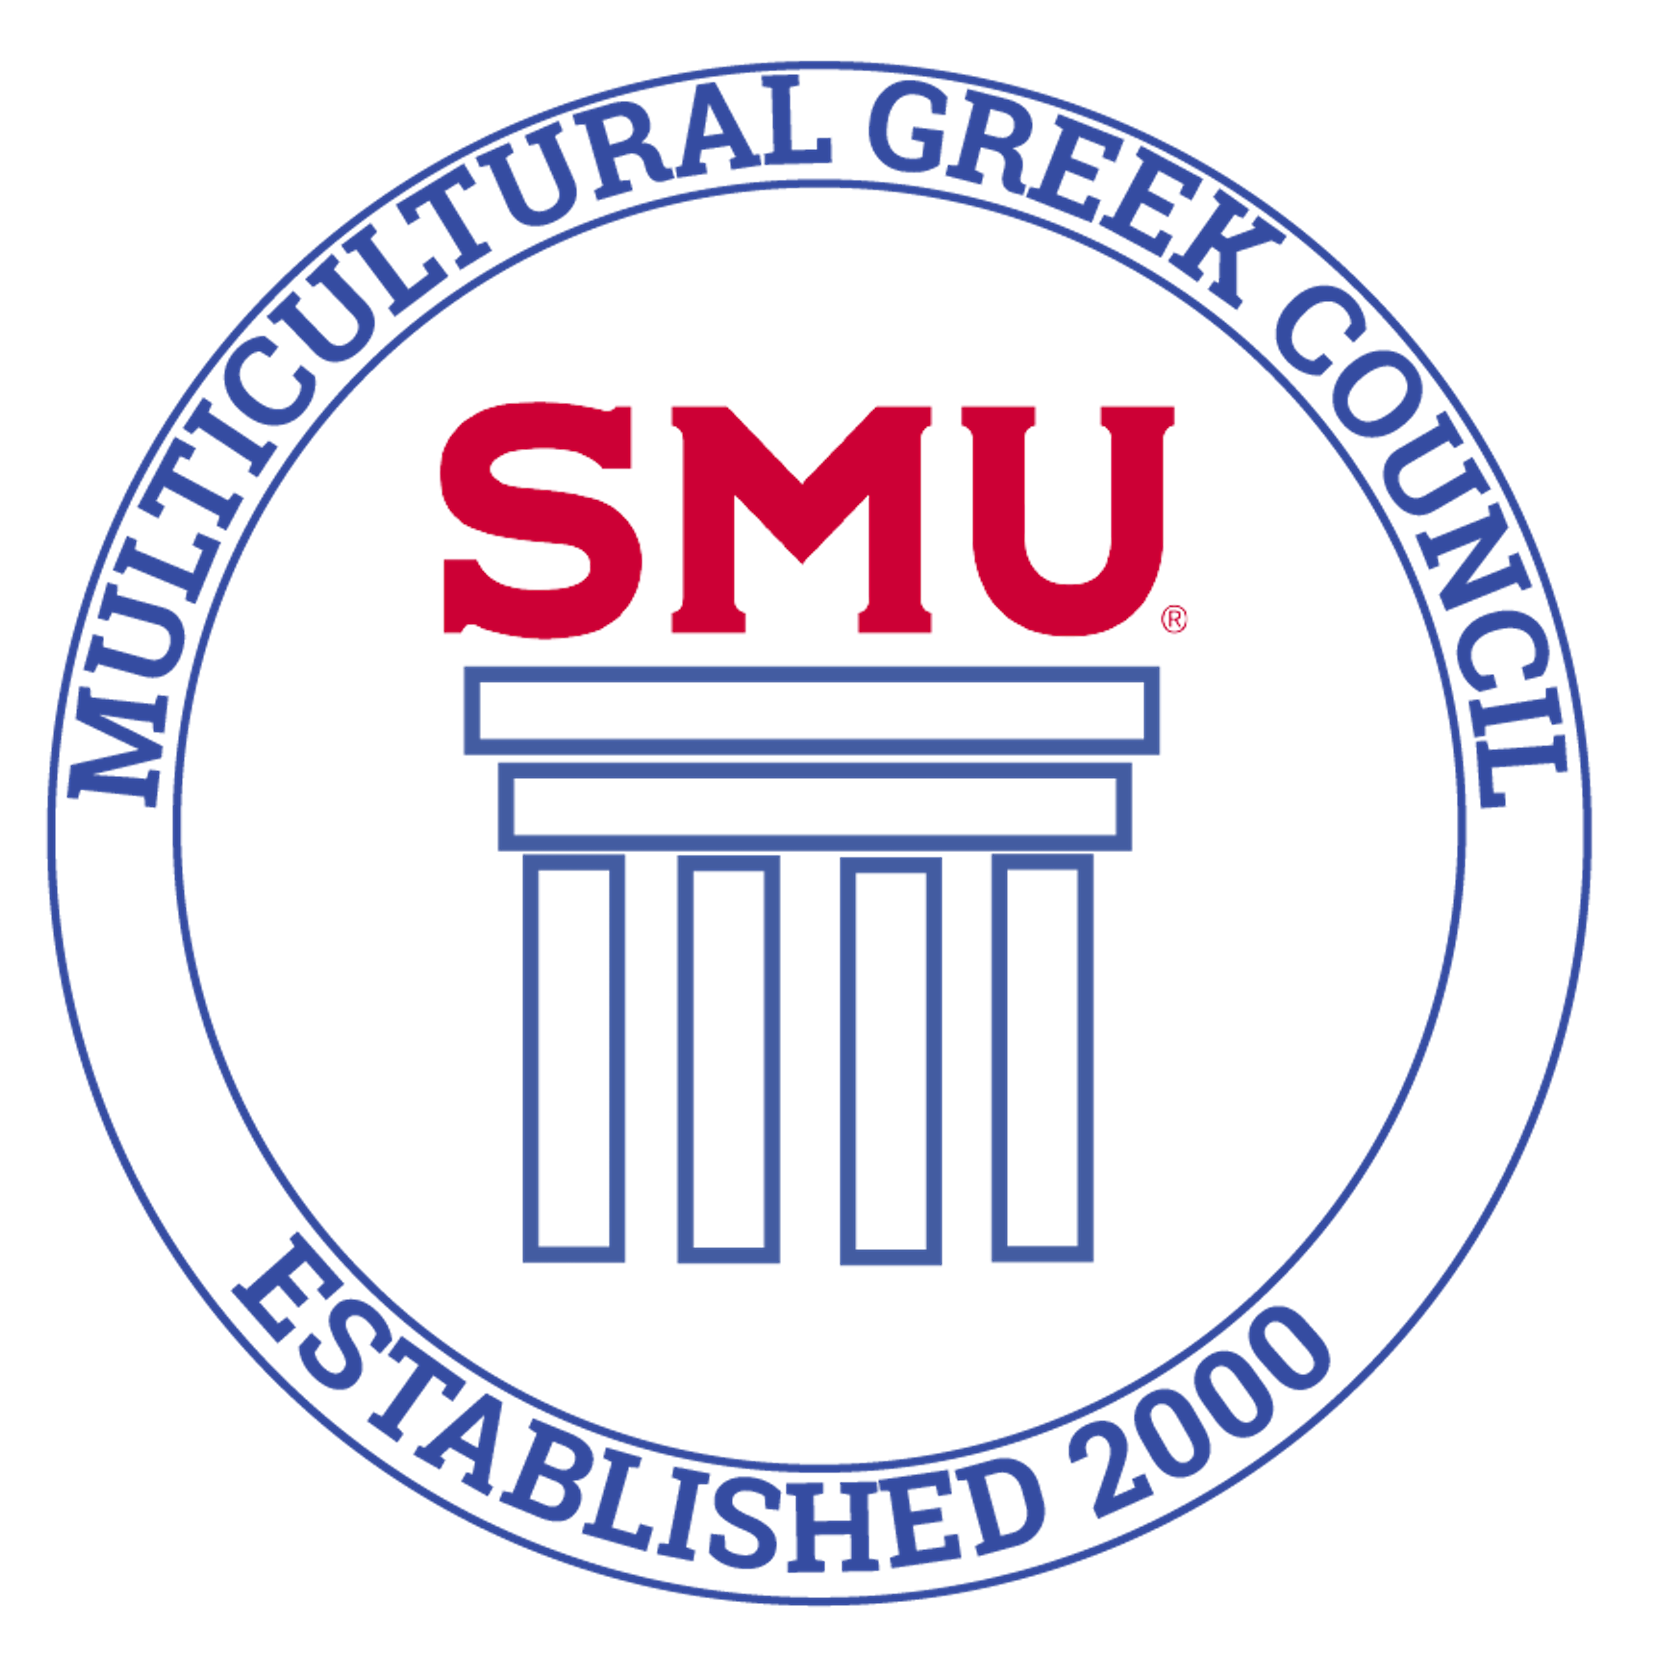 Multicultural Greek Council Logo